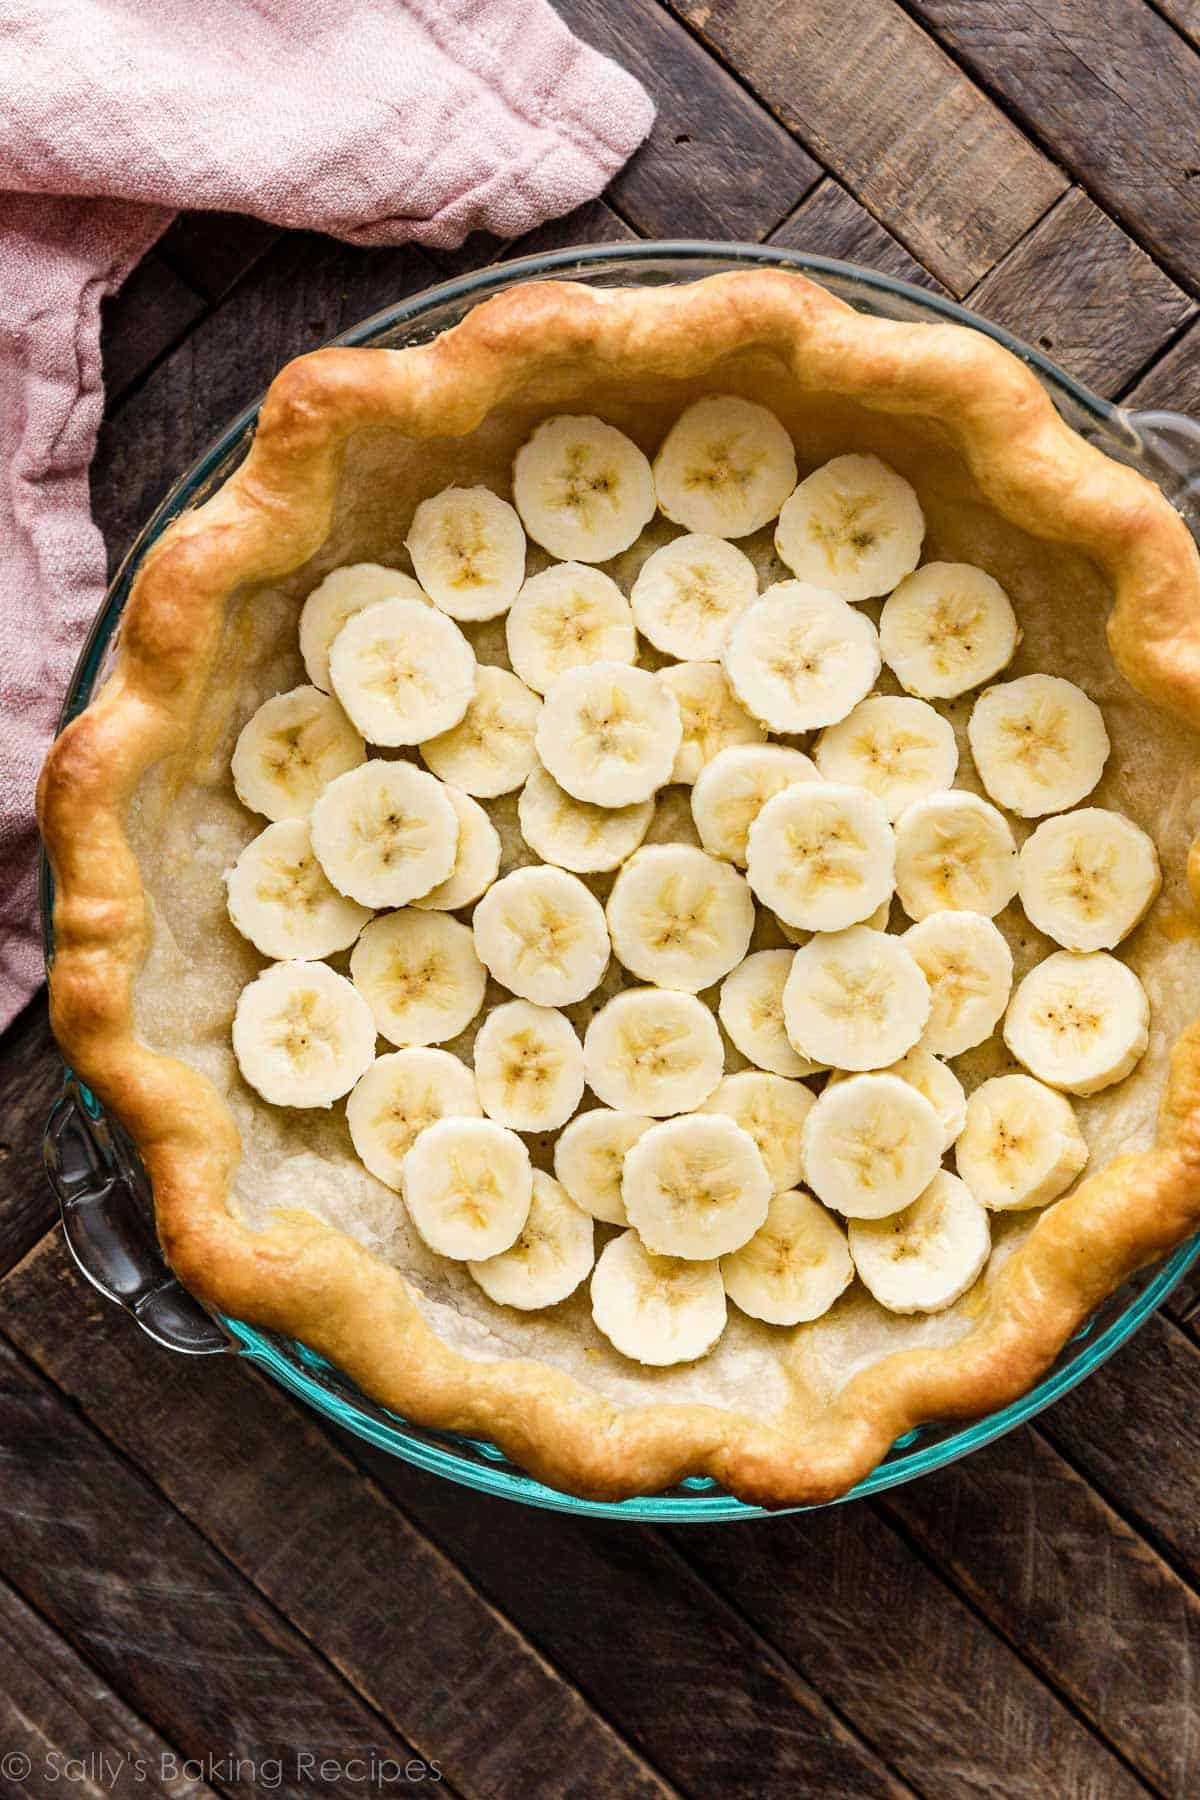 banana slices arranged in bottom of baked pie crust shell.